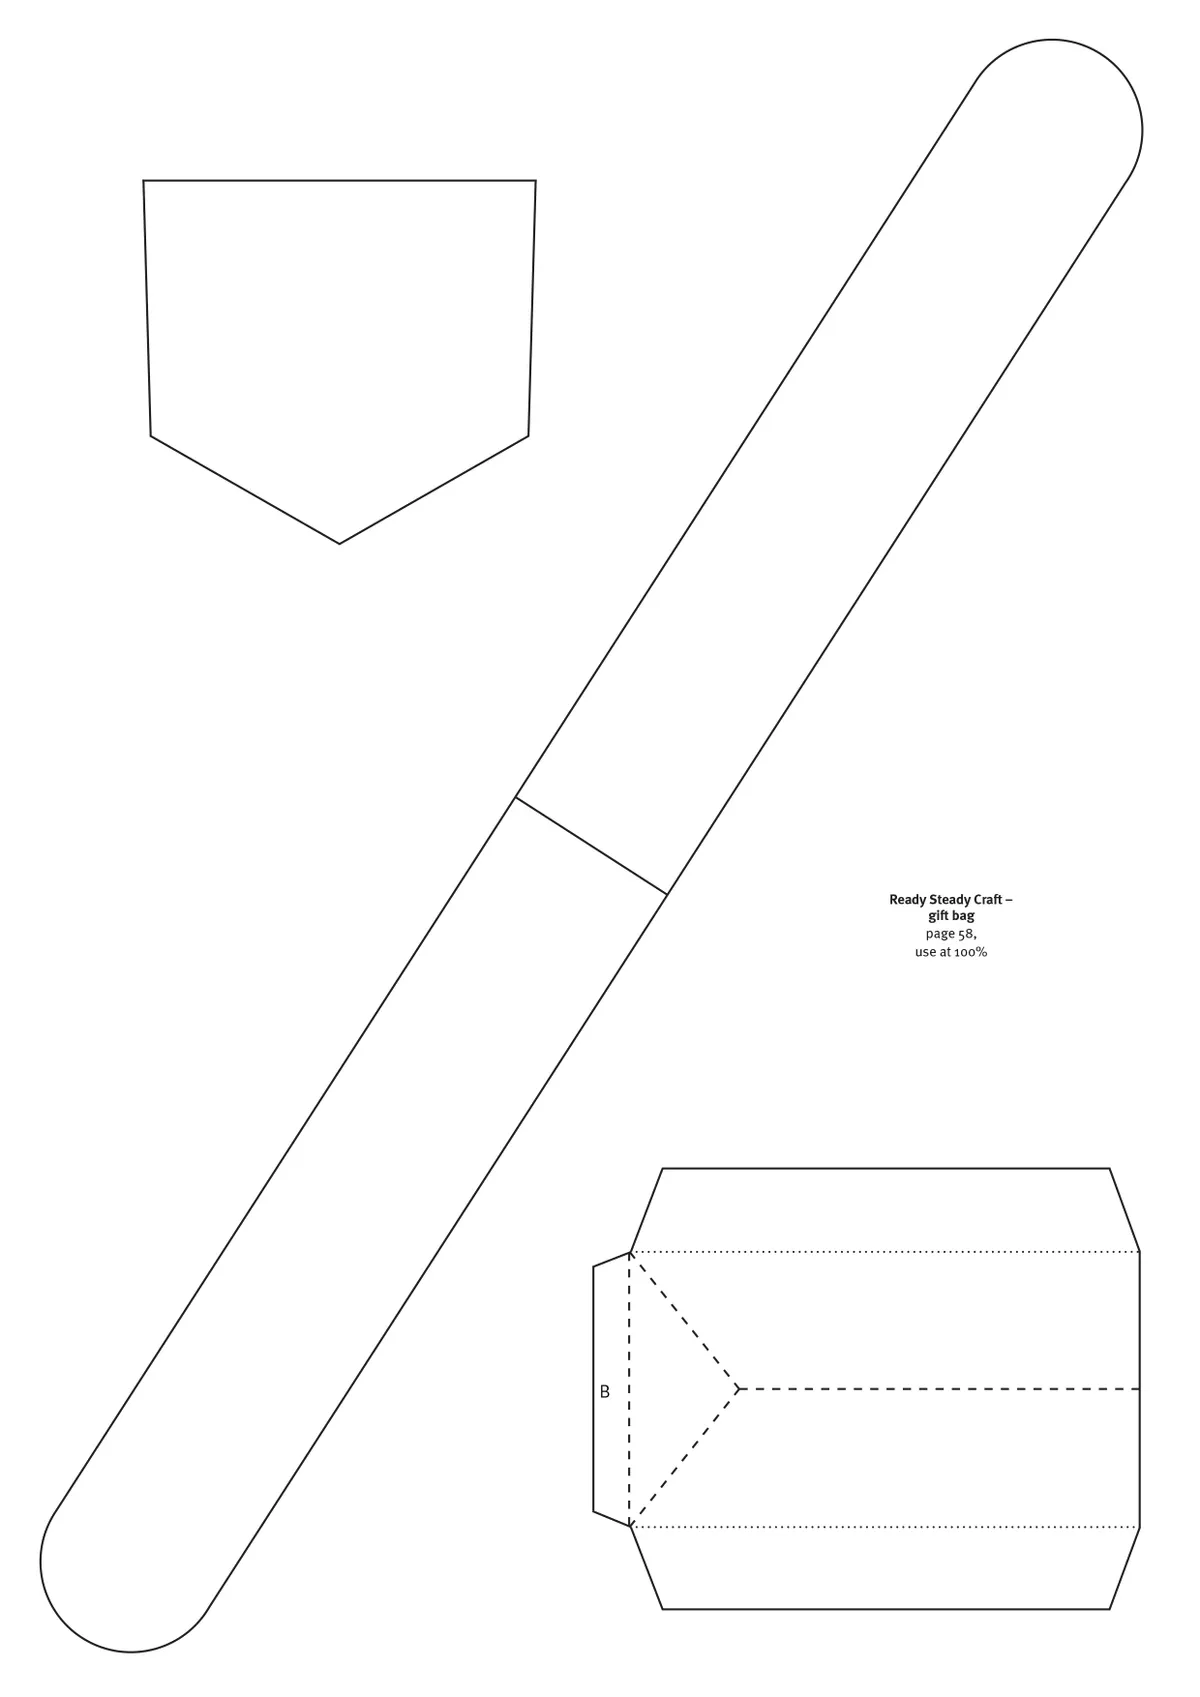 Free paper lampshade, gift box and dungarees base card templates 7